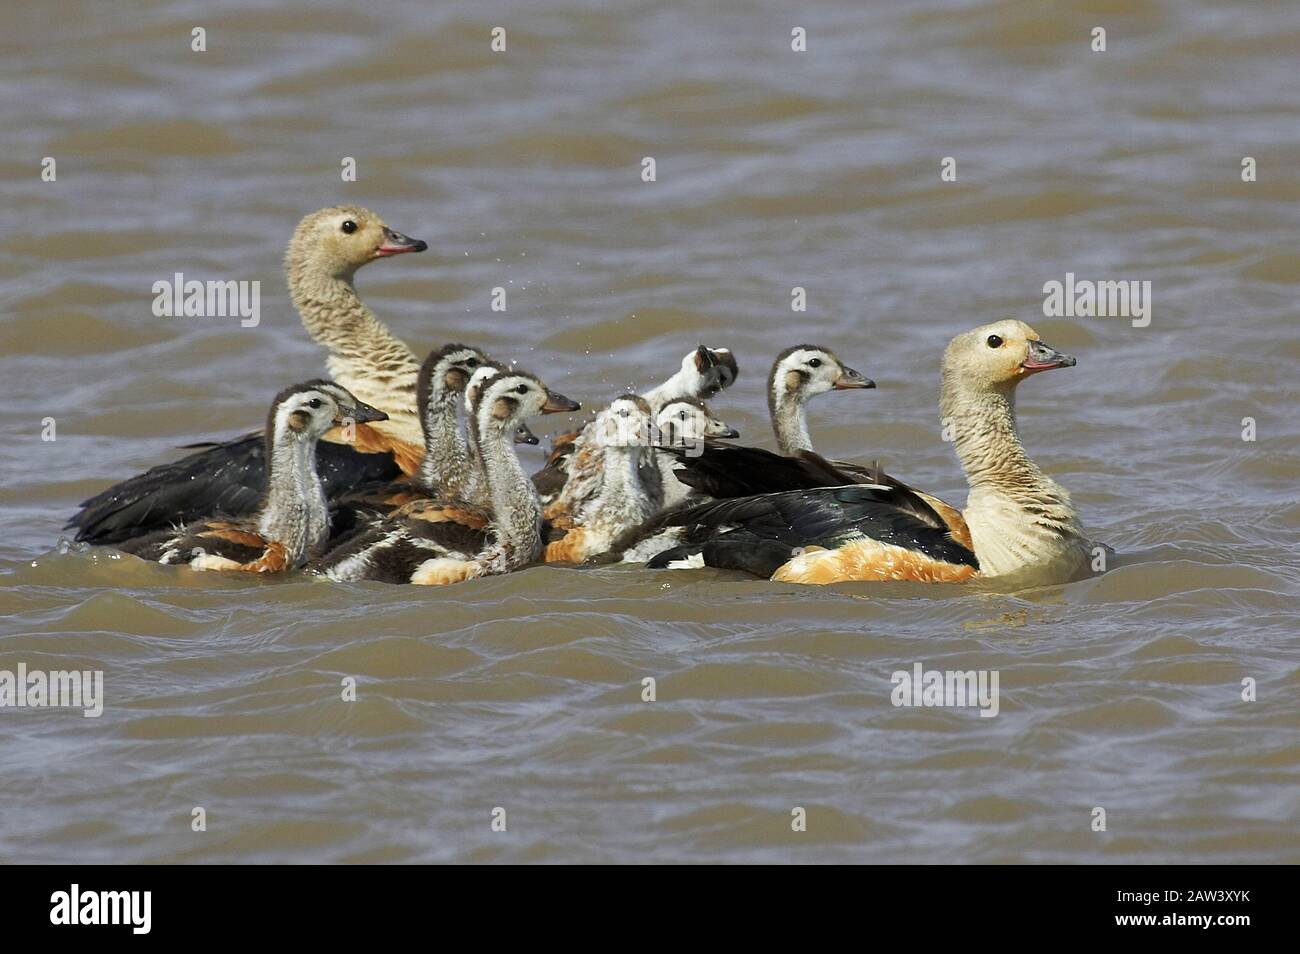 Orinoco Goose, neochen jubata, Pair with Chicks standing in Water, Los Lianos in Venezuela Stock Photo